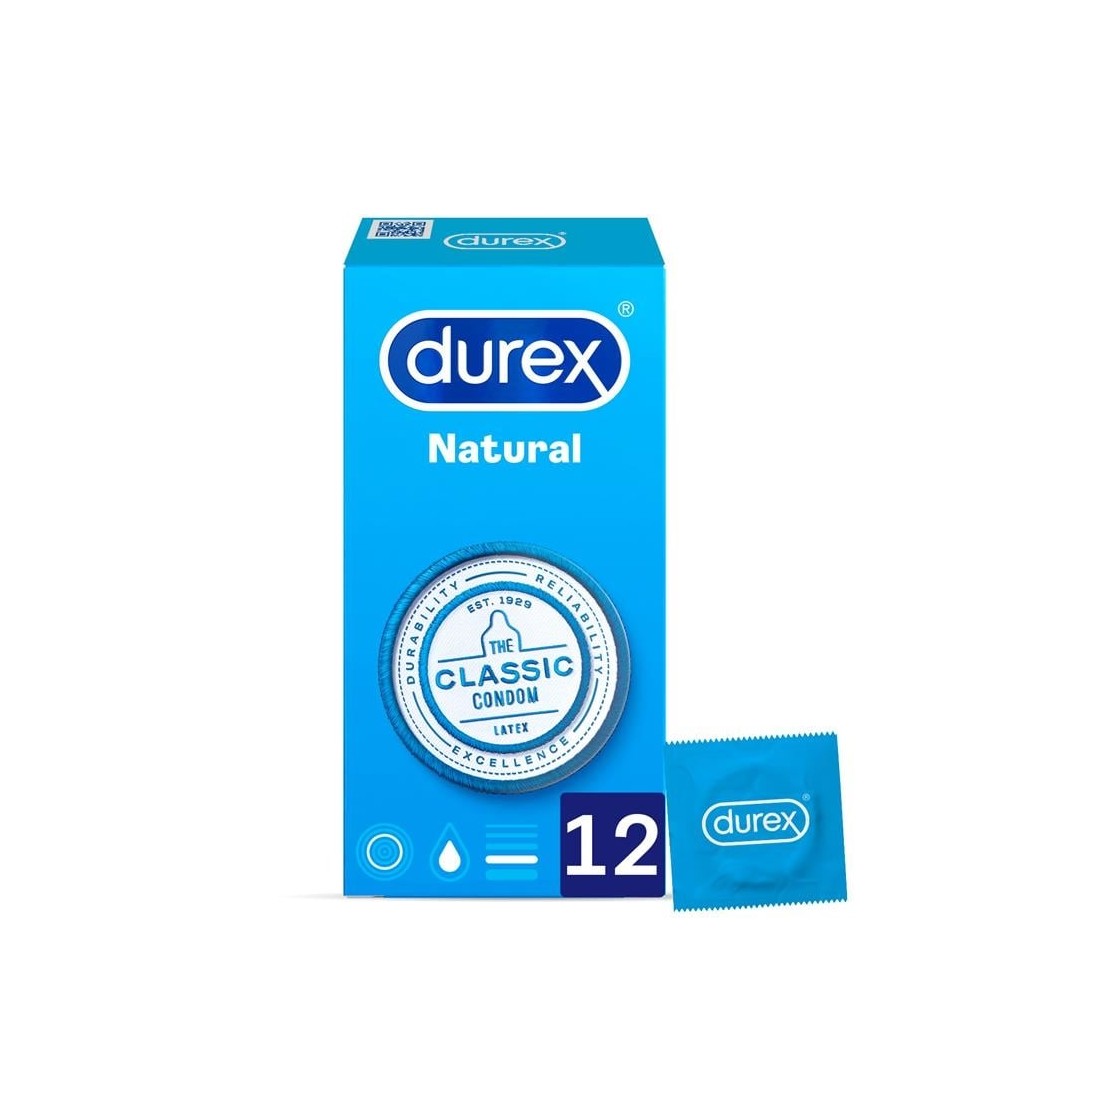 Preservativos Durex Natural Plus - PR2010308219